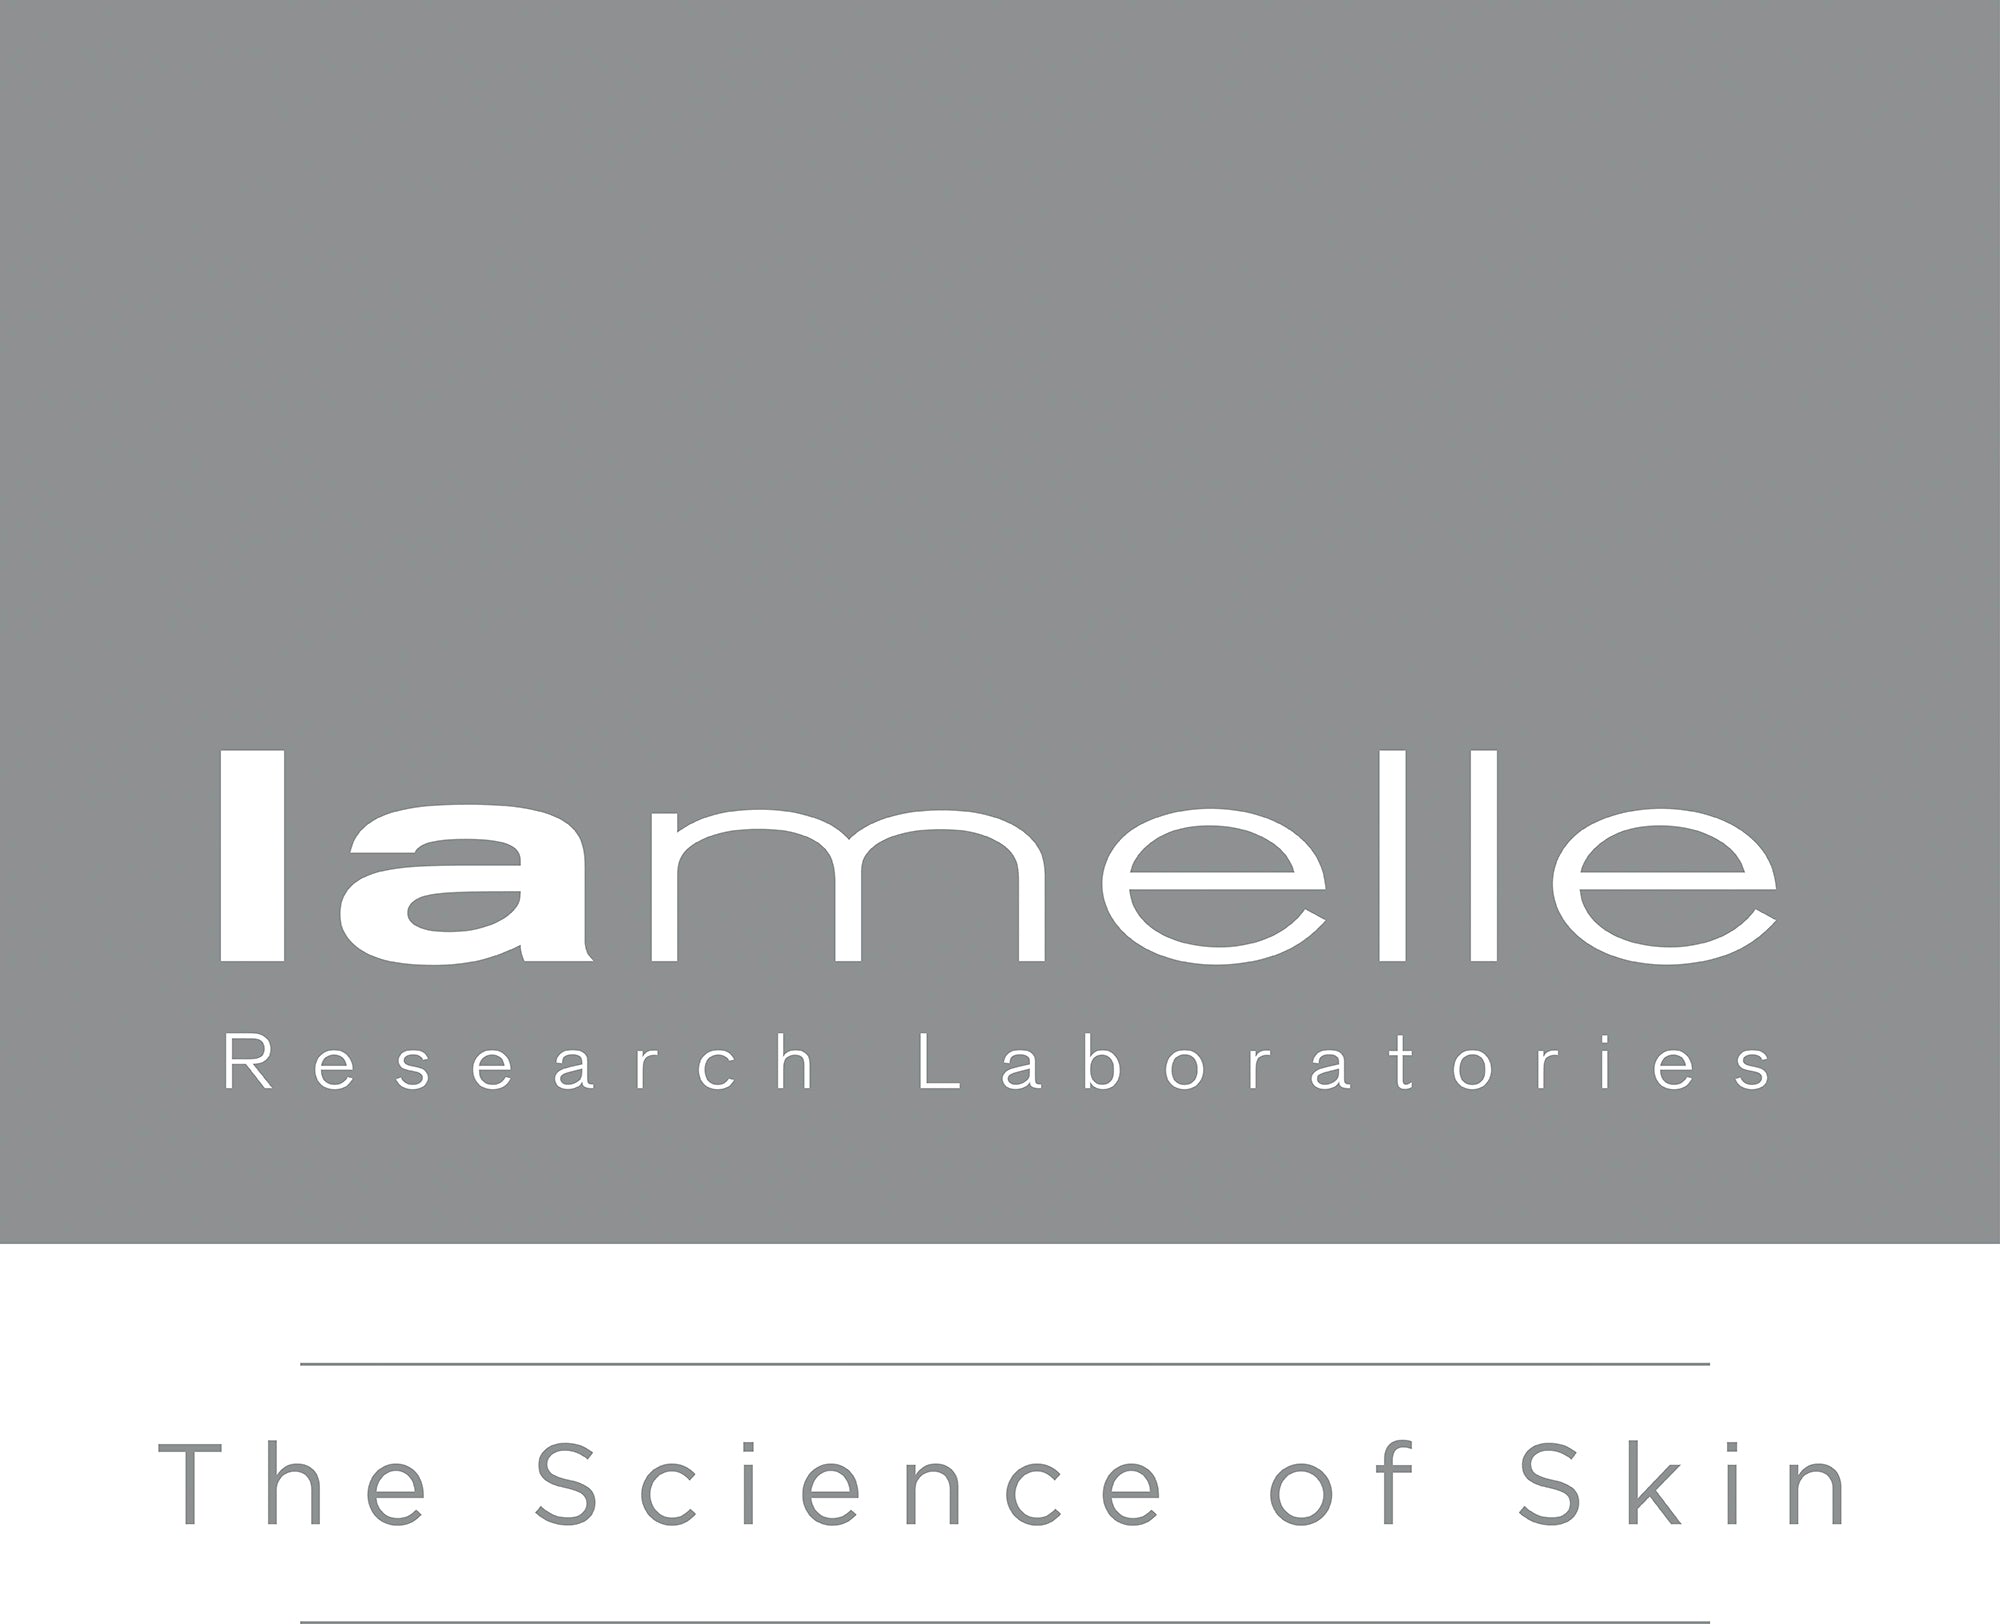 Serra Soothing Cream | Lamelle